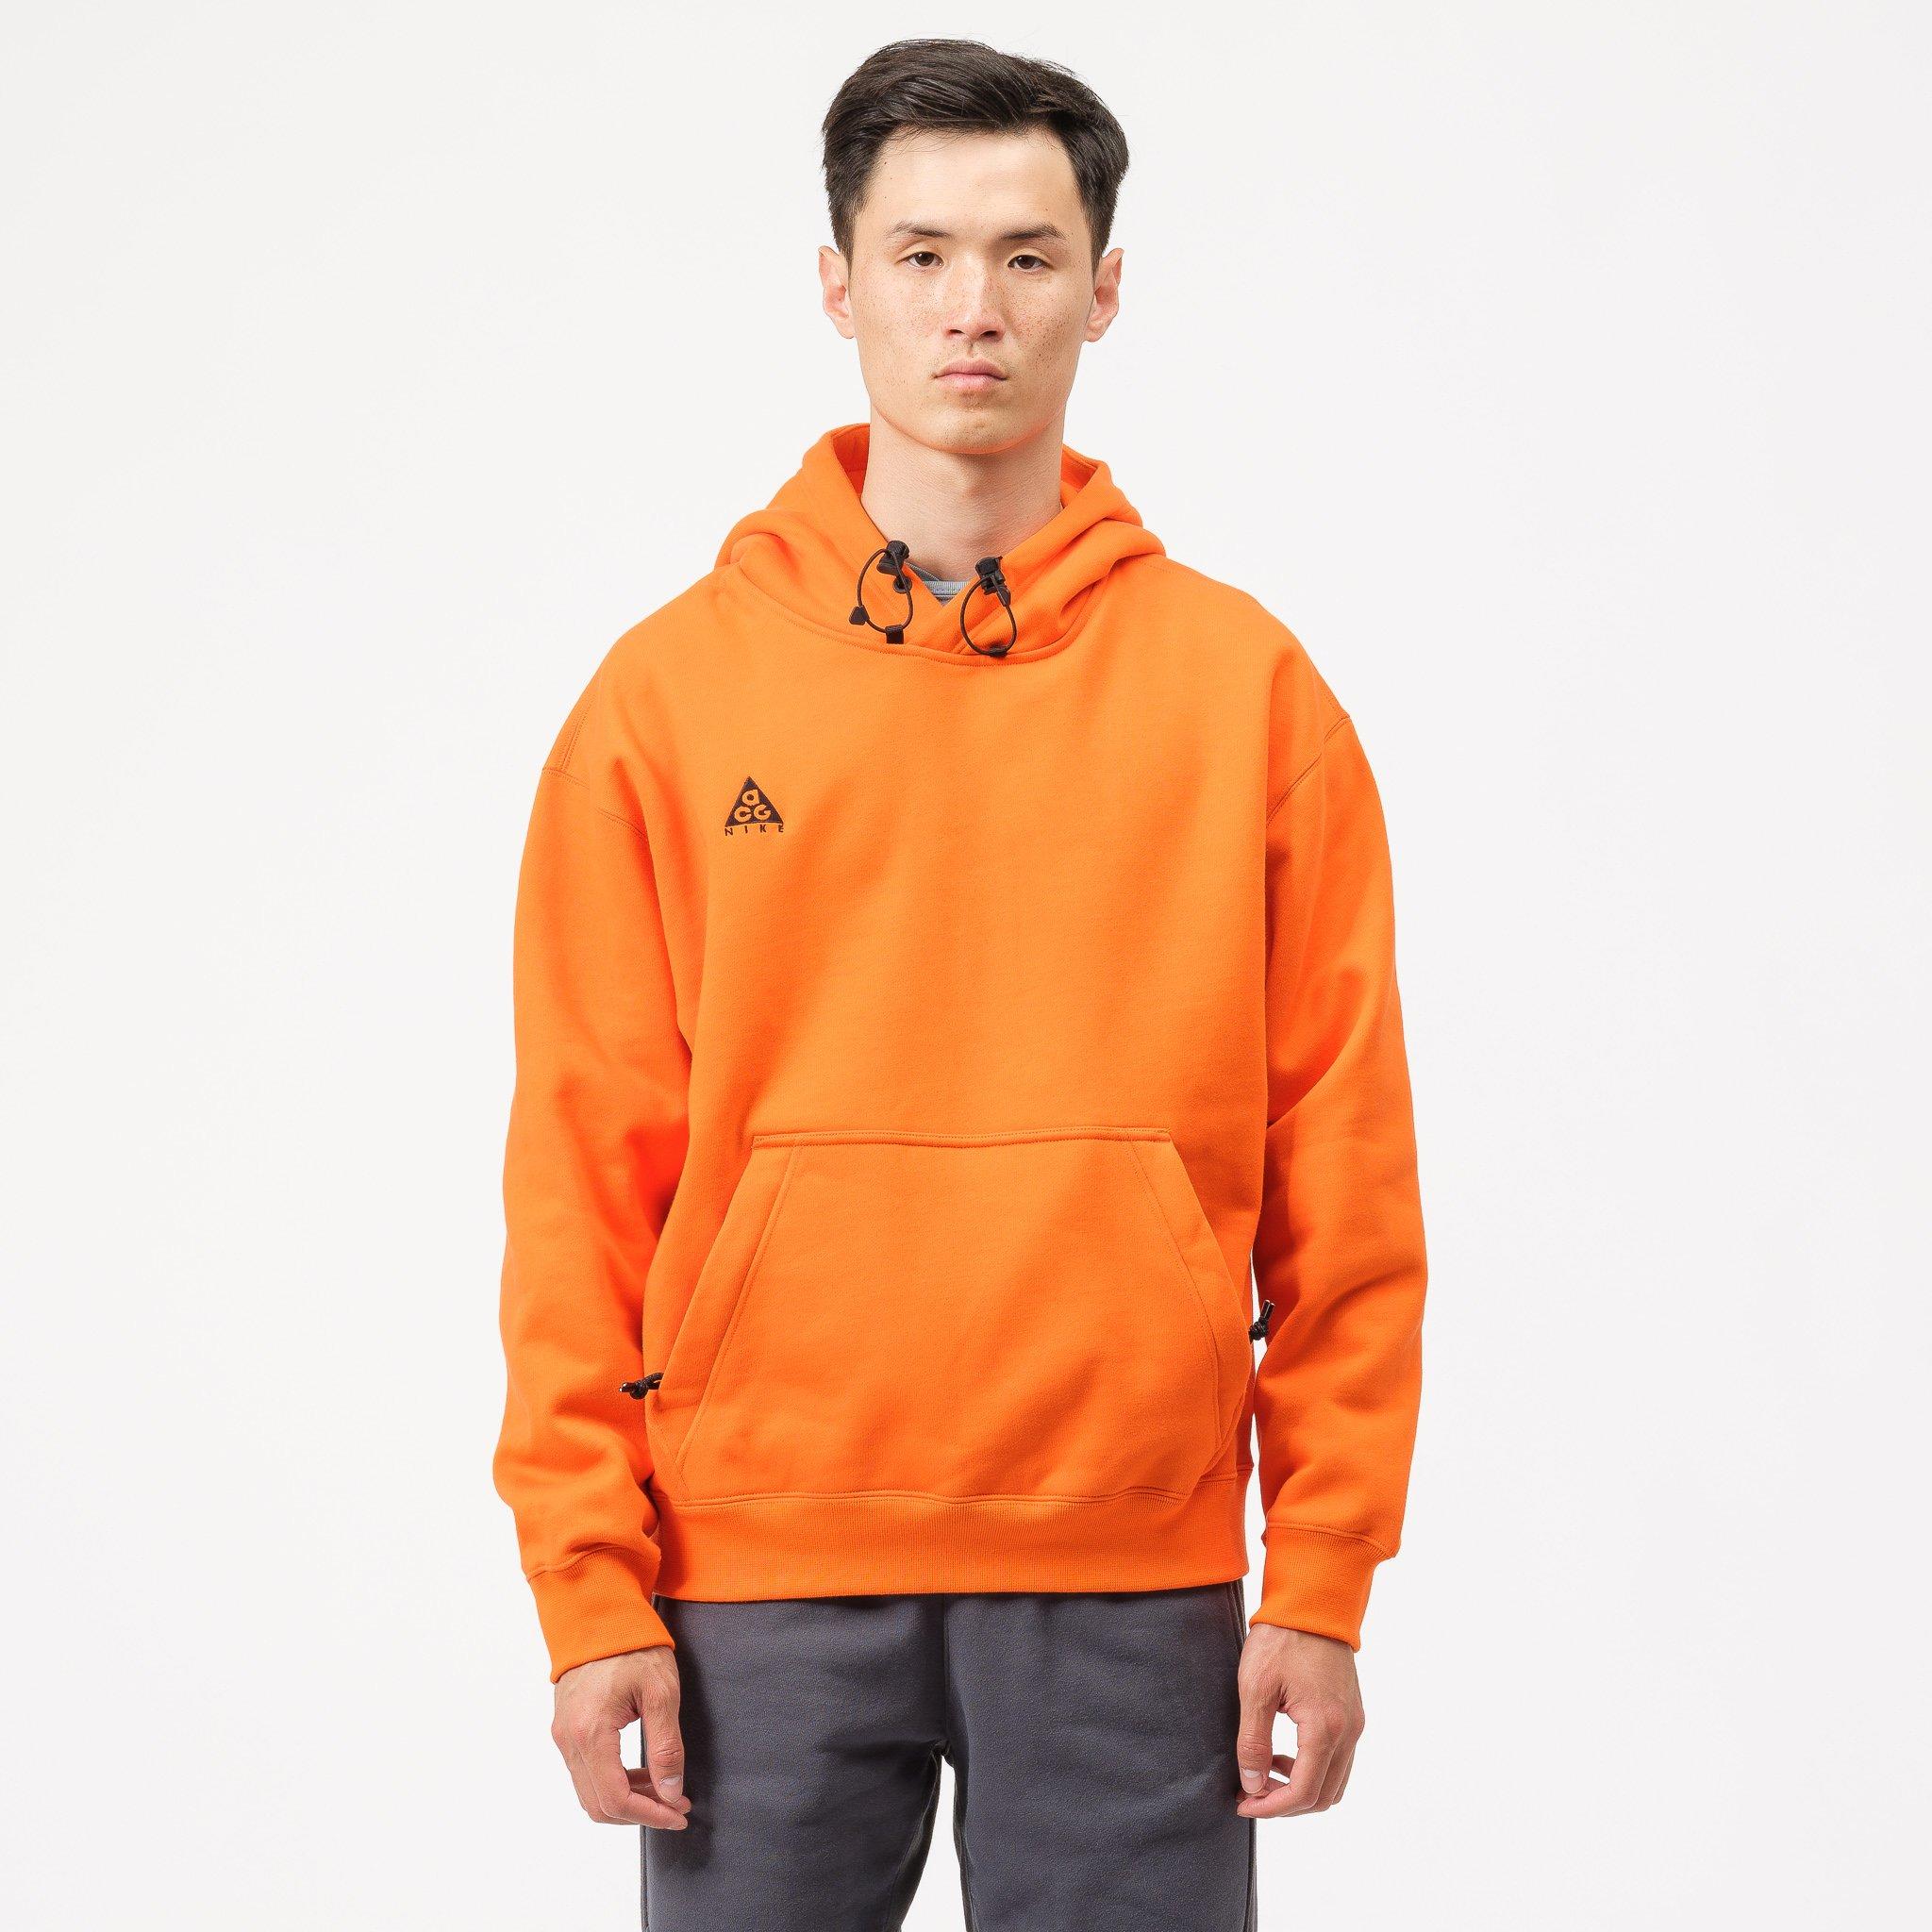 nike acg hoodie orange Off 65% - sirinscrochet.com